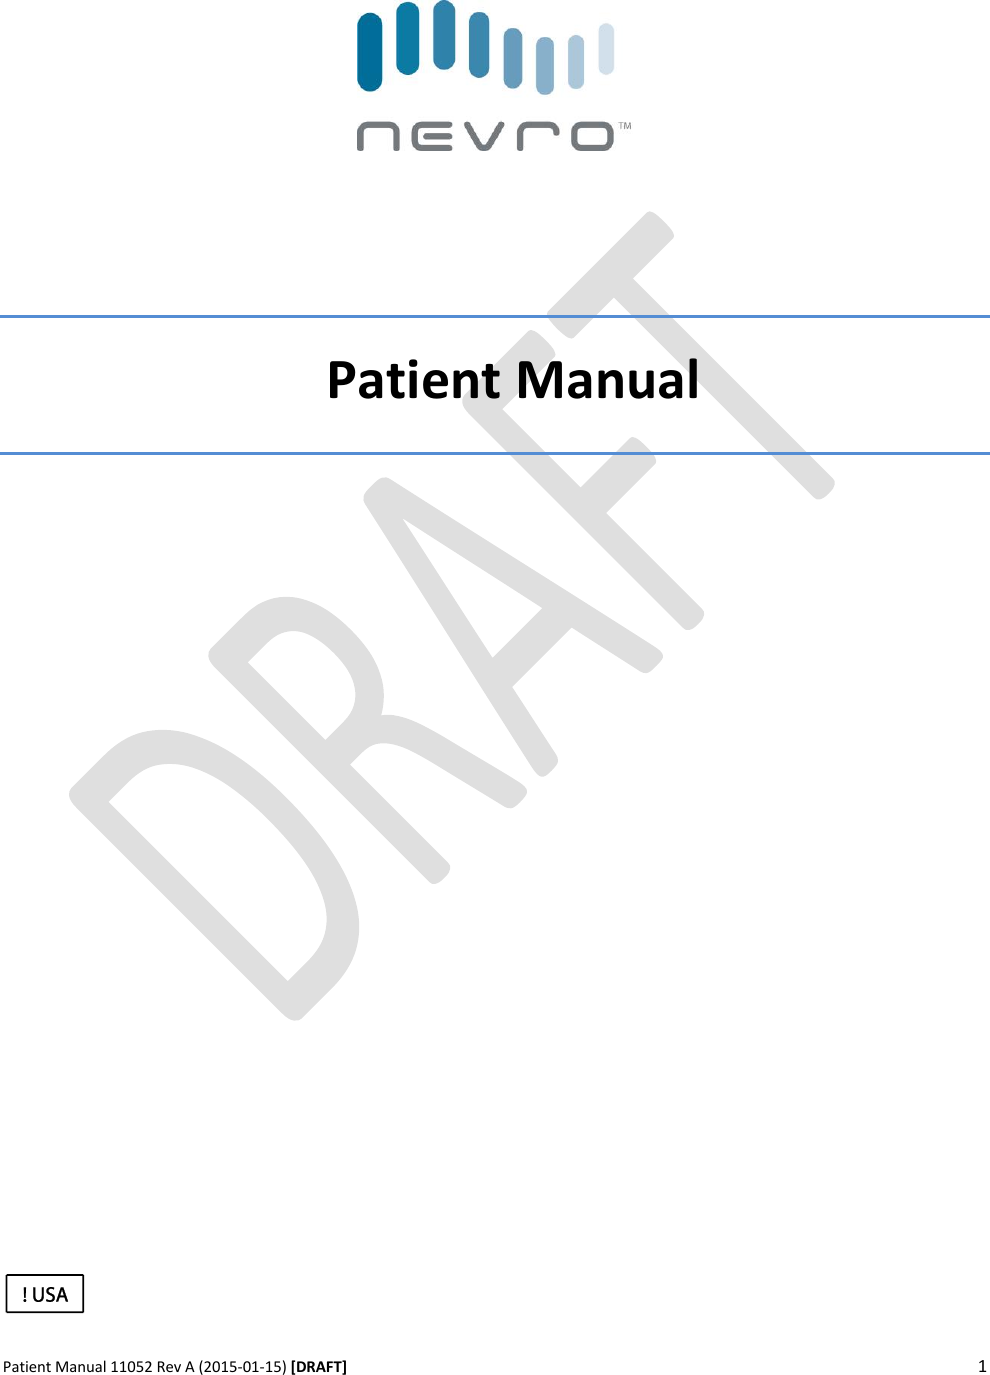      Patient Manual 11052 Rev A (2015-01-15) [DRAFT] 1            Patient Manual                      